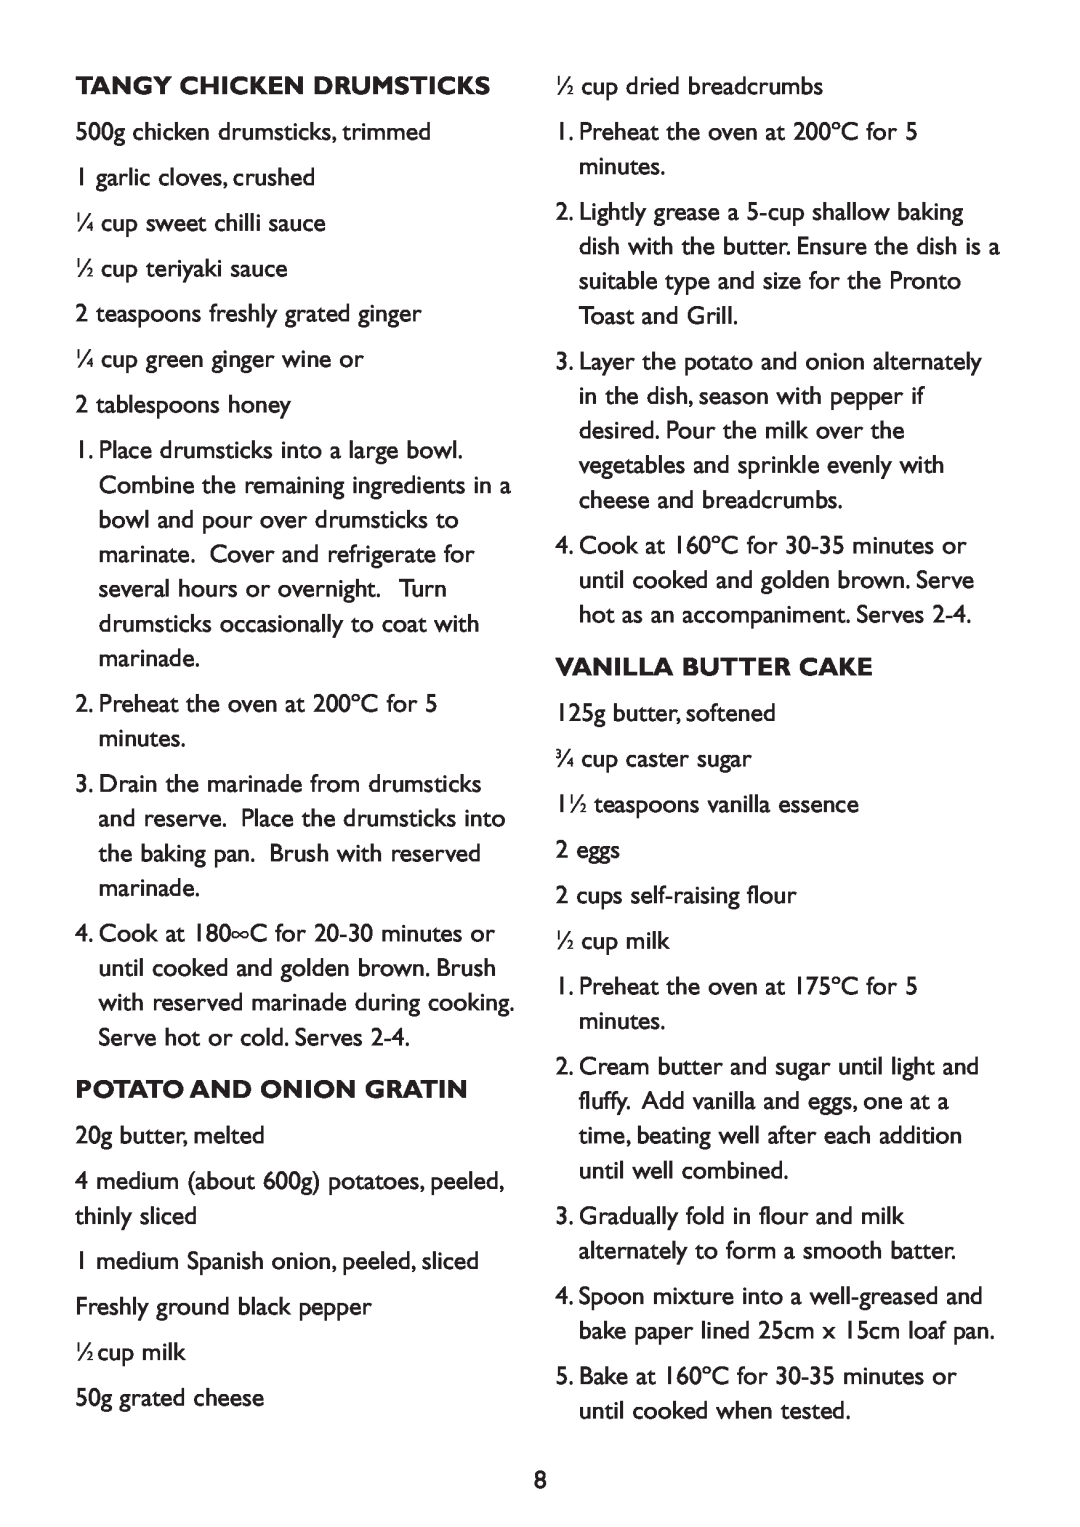 Kambrook KOT100 manual Tangy Chicken Drumsticks, Potato And Onion Gratin, Vanilla Butter Cake 